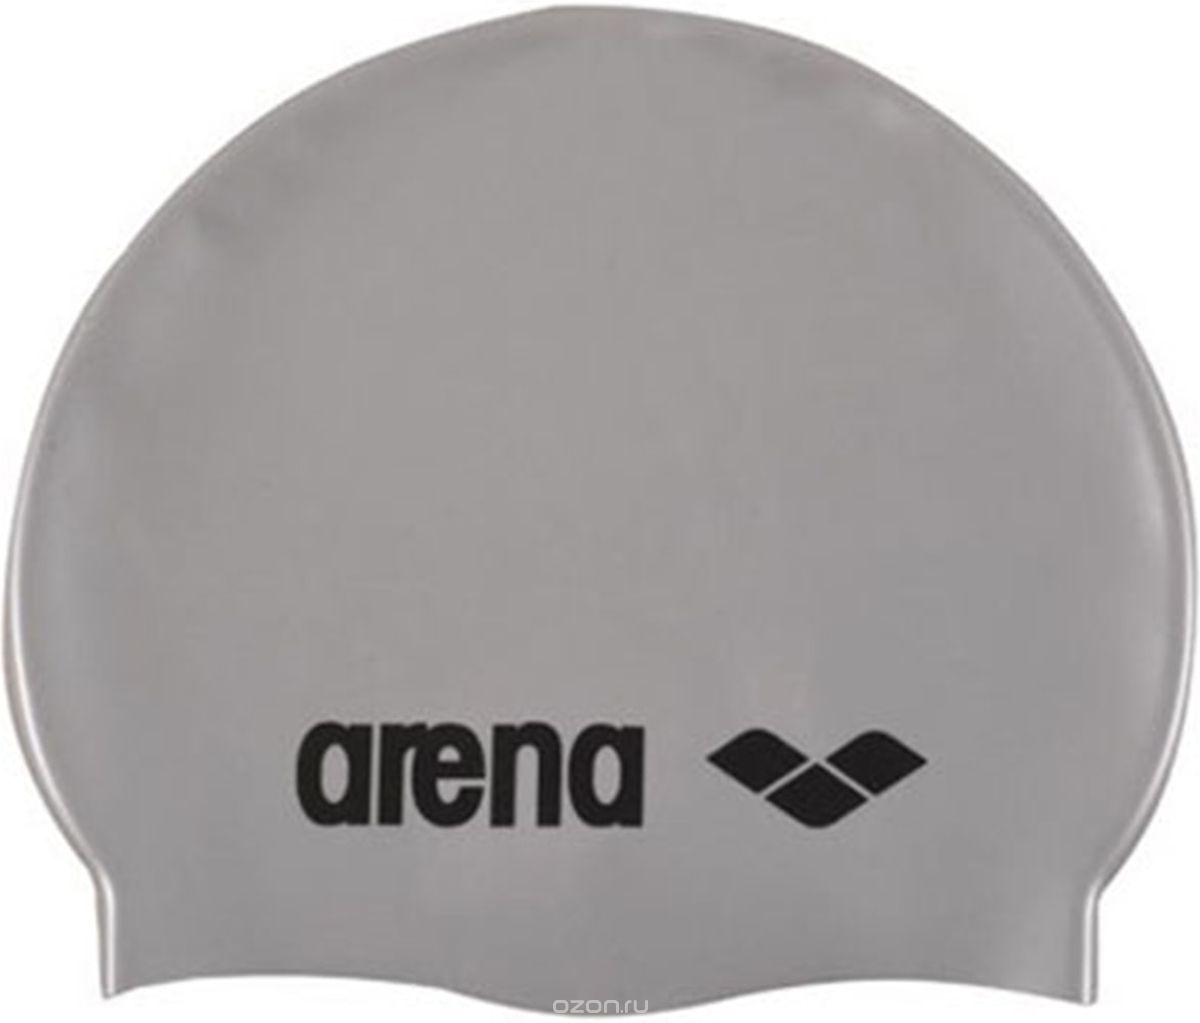    Arena 